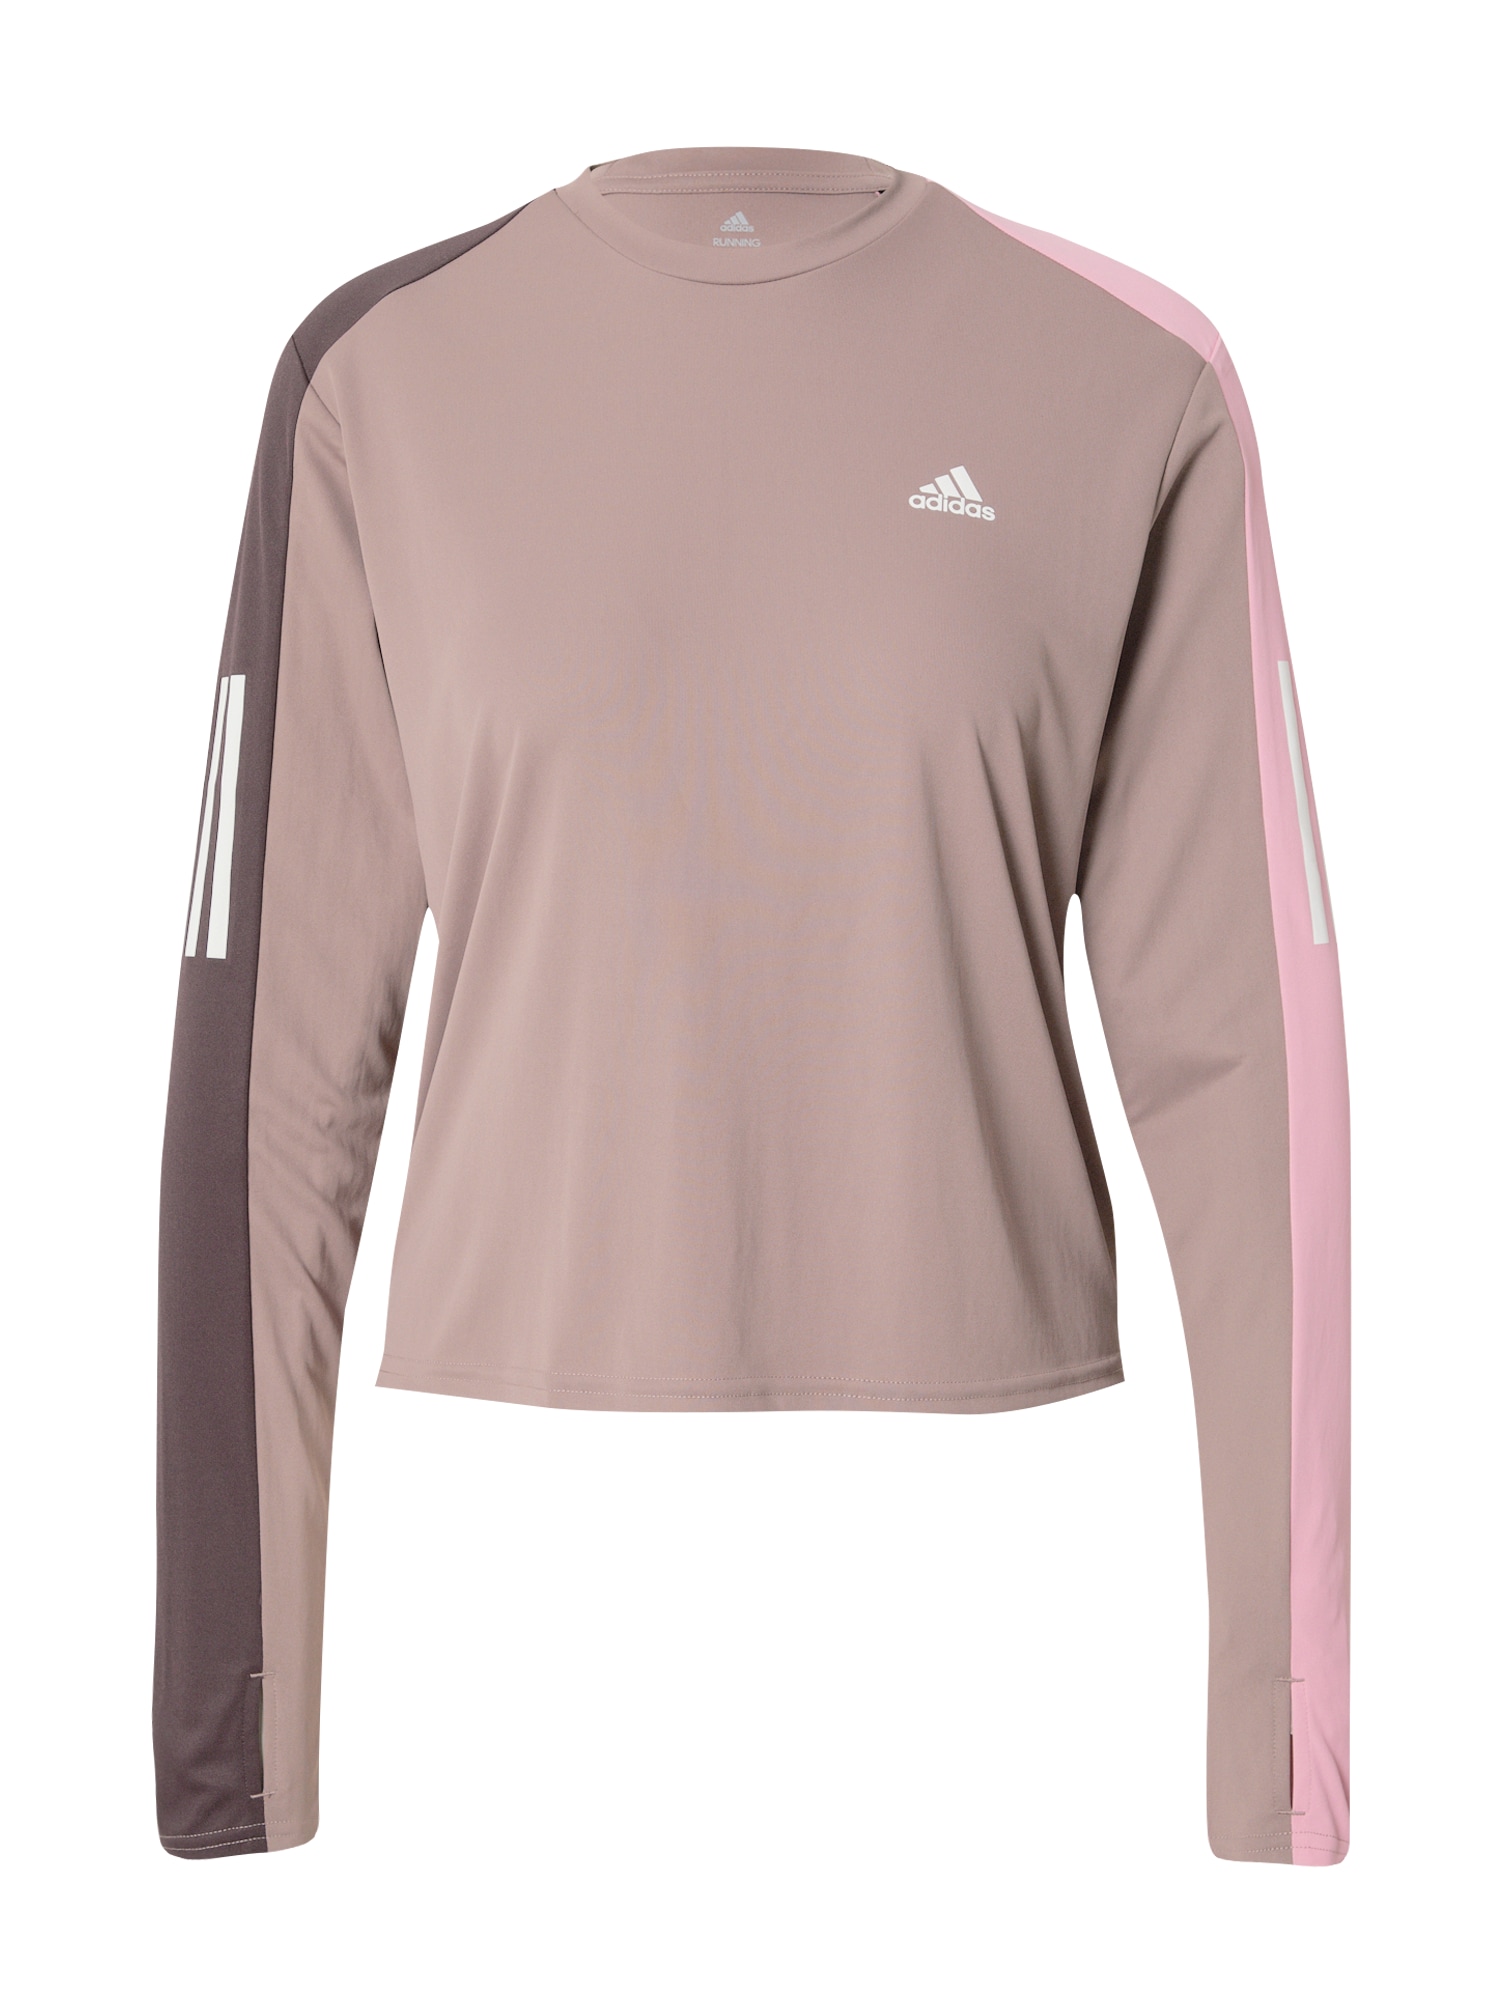 ADIDAS PERFORMANCE Sporta krekls gaiši brūns / plūmju / rožkrāsas